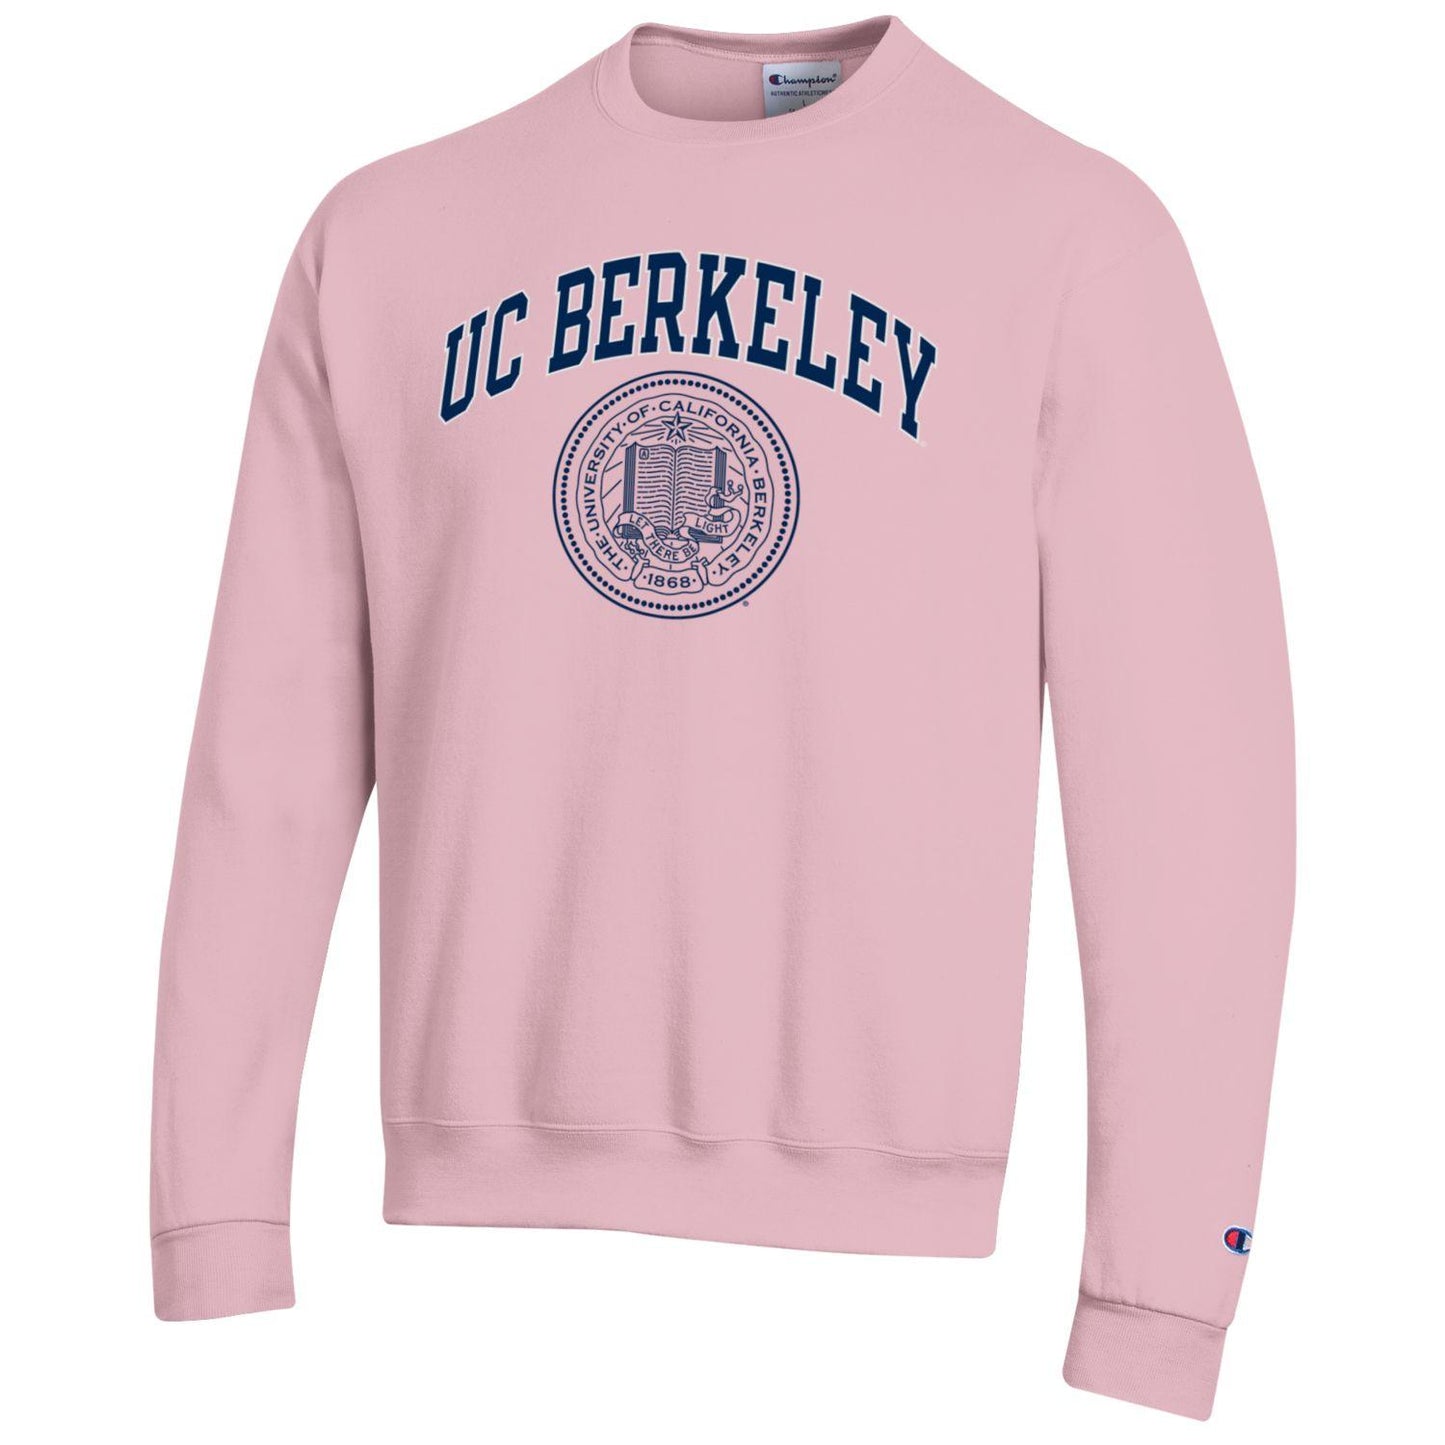 University California Berkeley Berkeley arch & seal crew-neck Shop College Wear